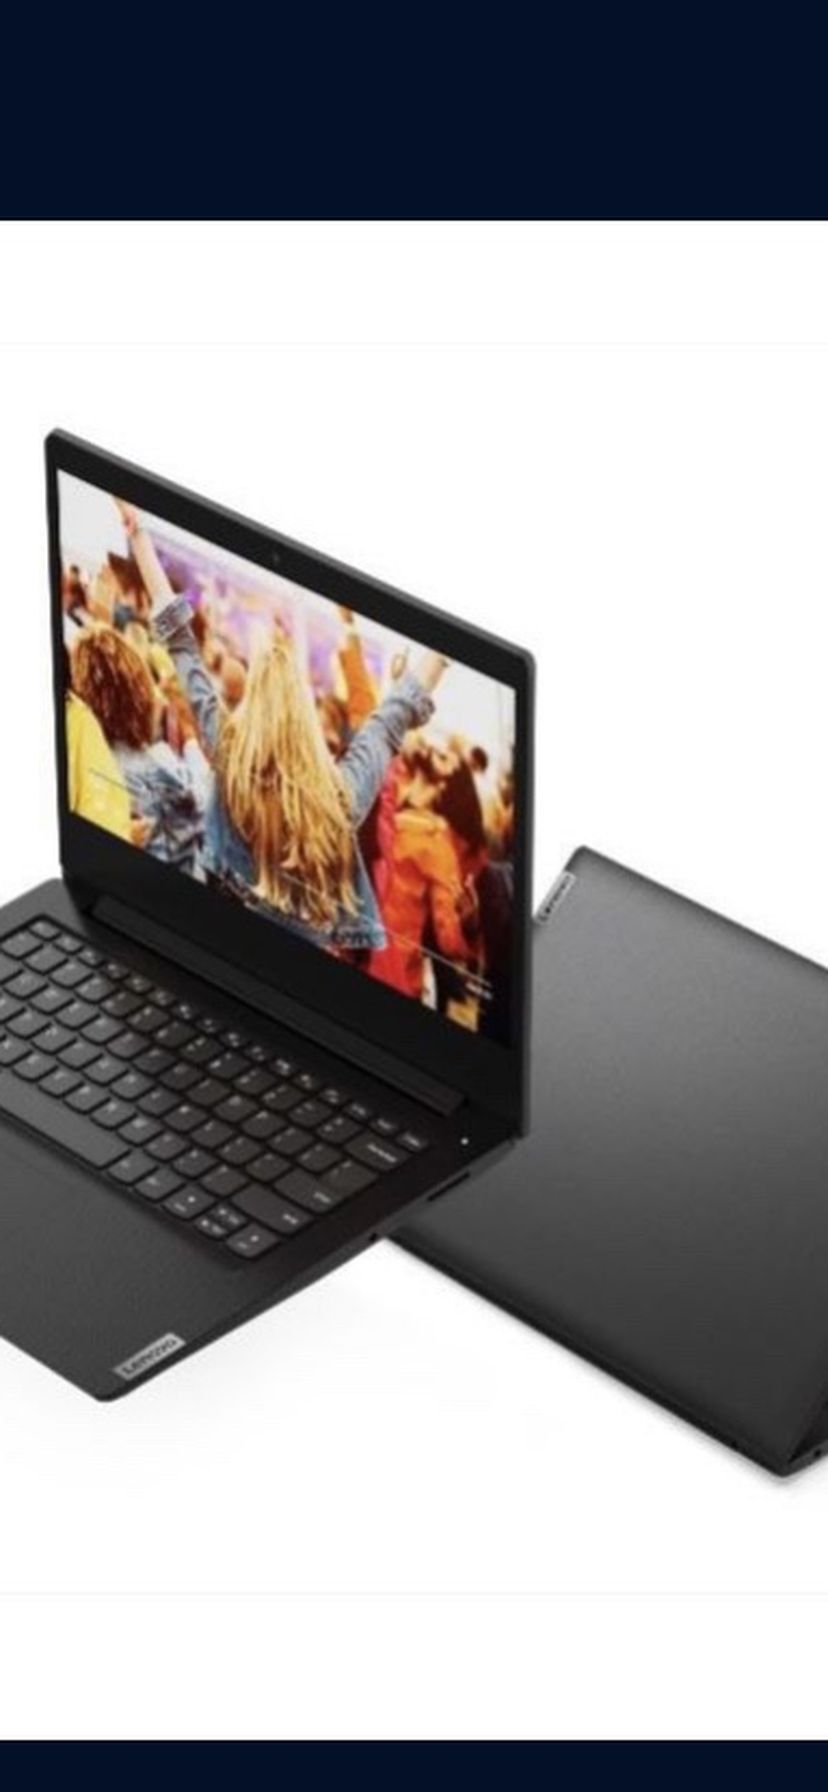 Lenovo Ideapad 3 Laptop 14 inch 2.4GHz Intel Processor 4GB Ram + 128GB SSD